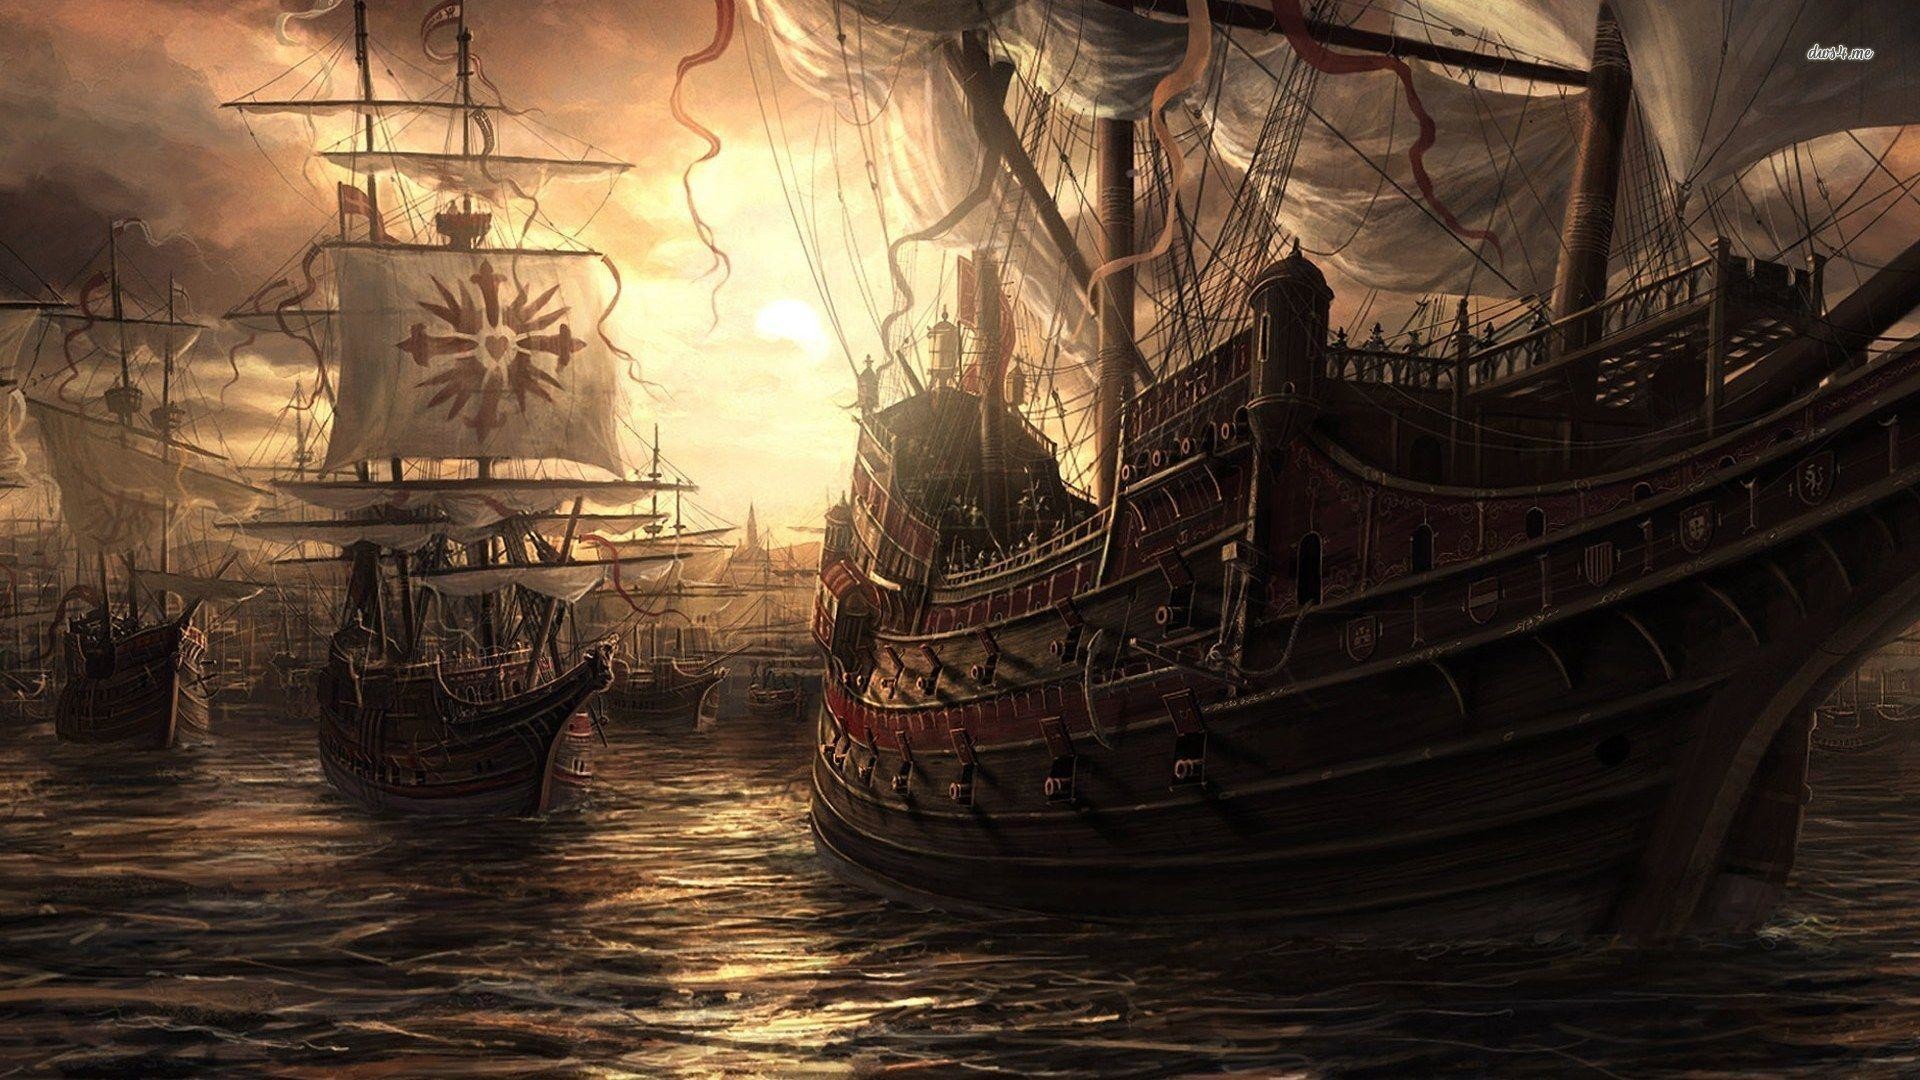 1920x1080 Pirate ships wallpaper - Fantasy wallpapers - #